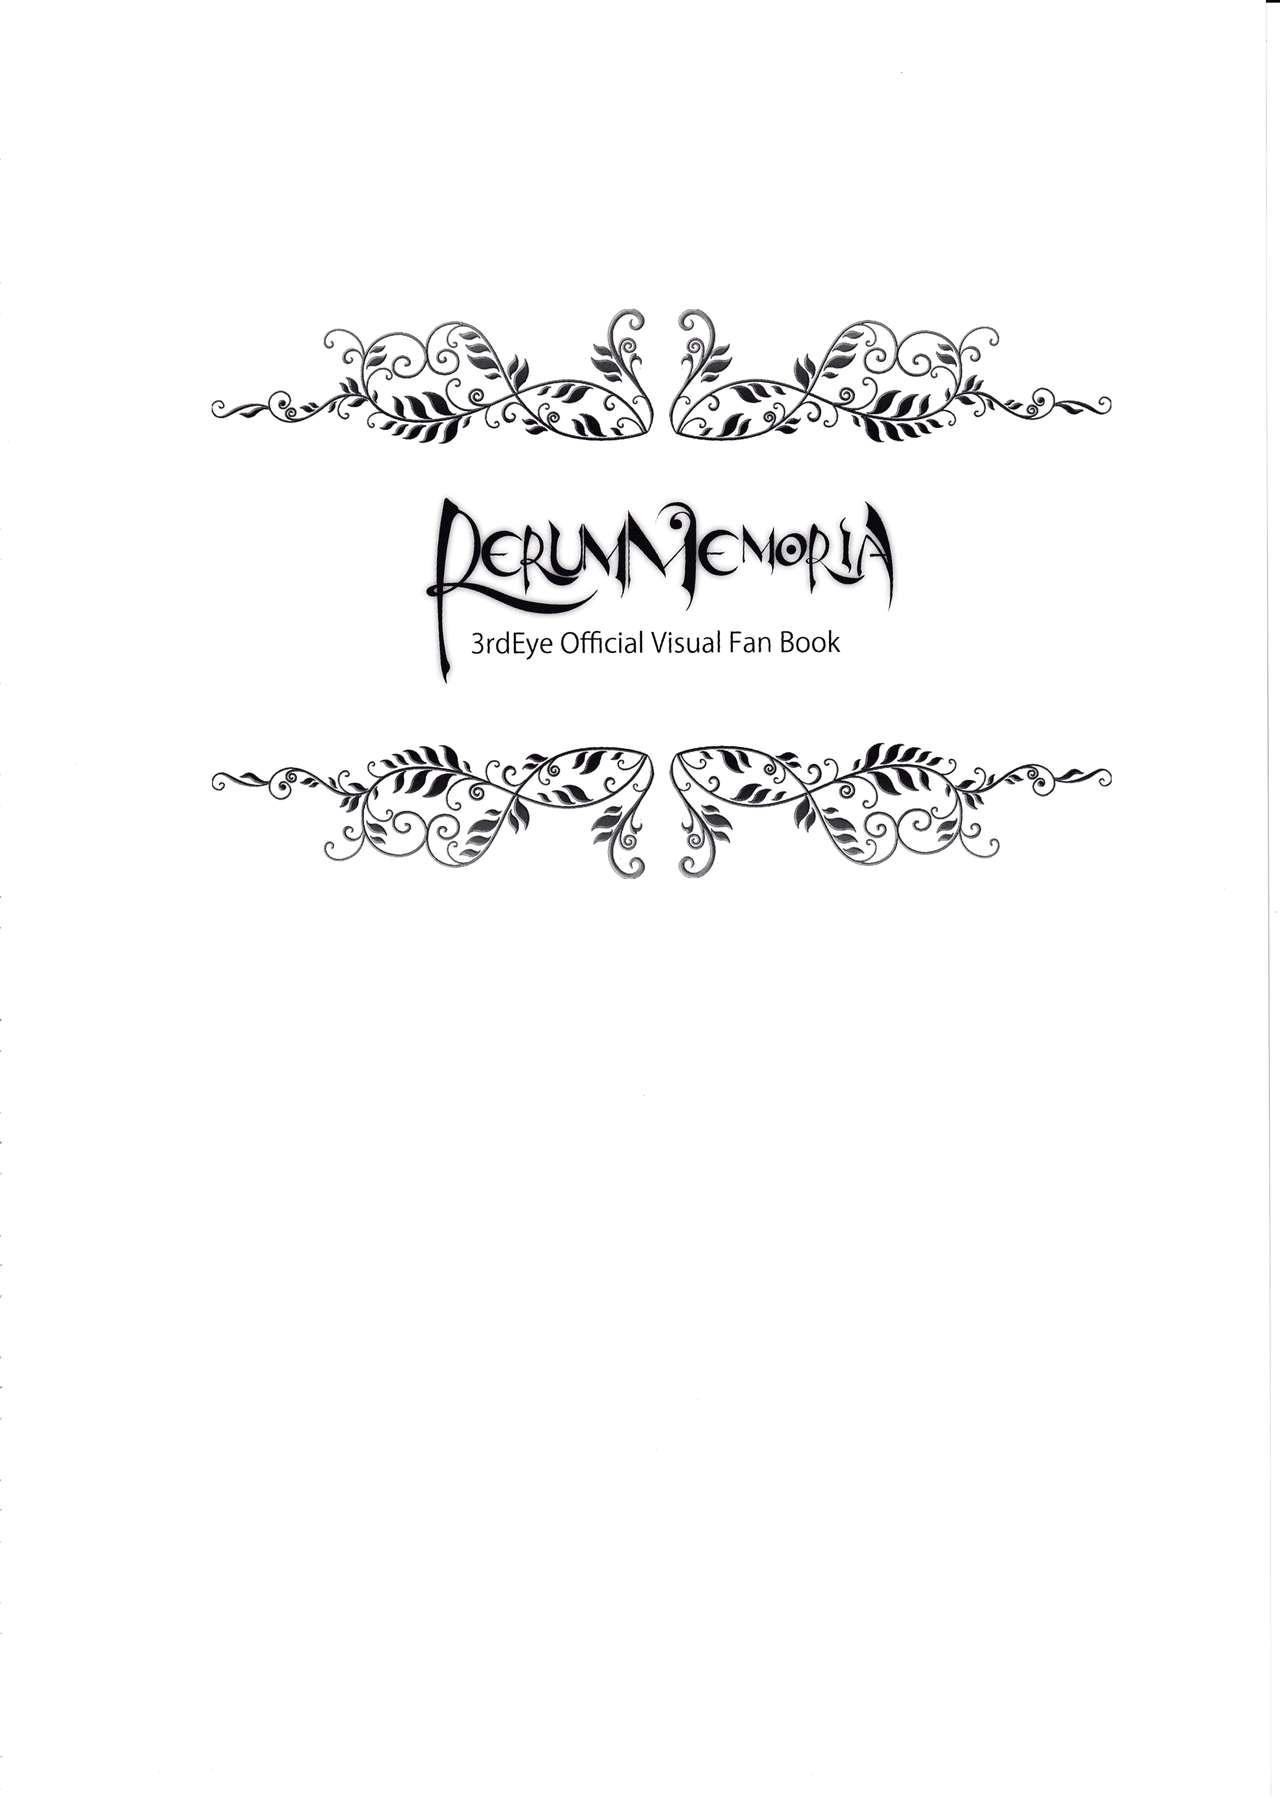 3rdEye Official Visual Fan Book RERUM MEMORIA 2